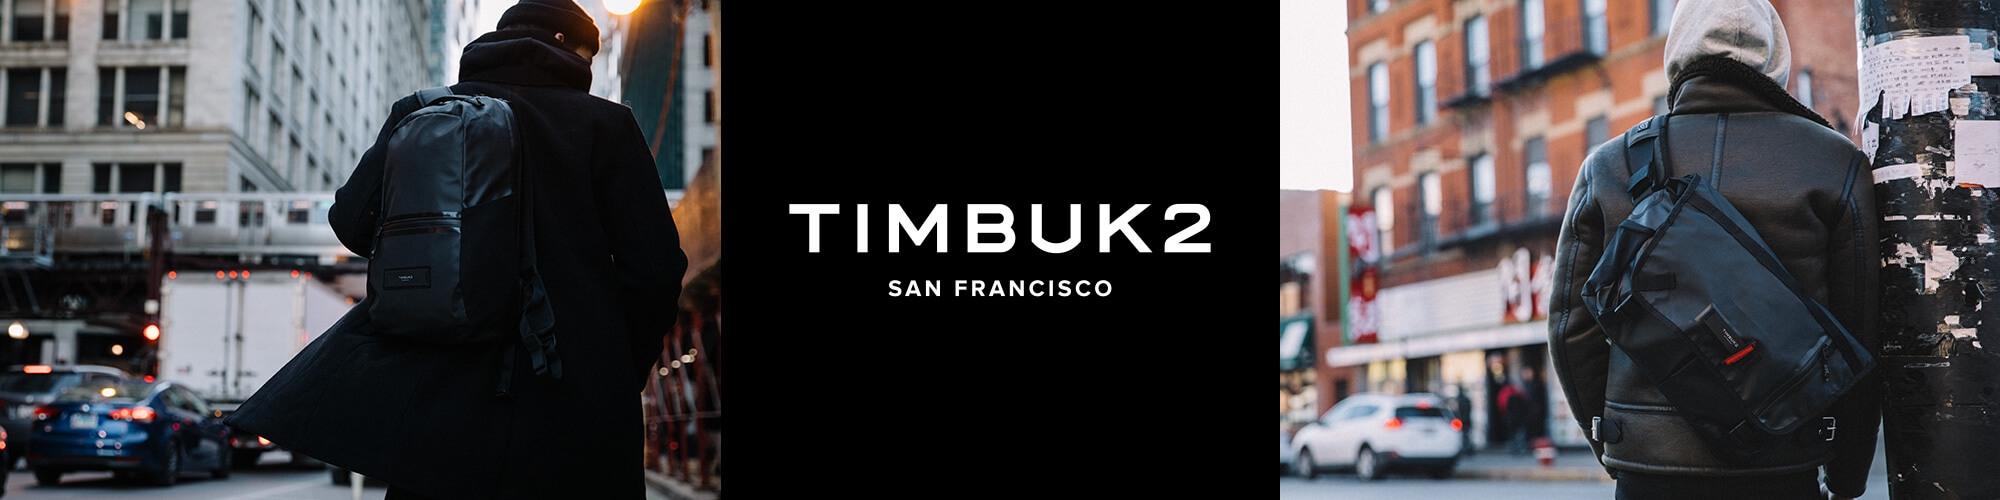 Timbuk2 UK